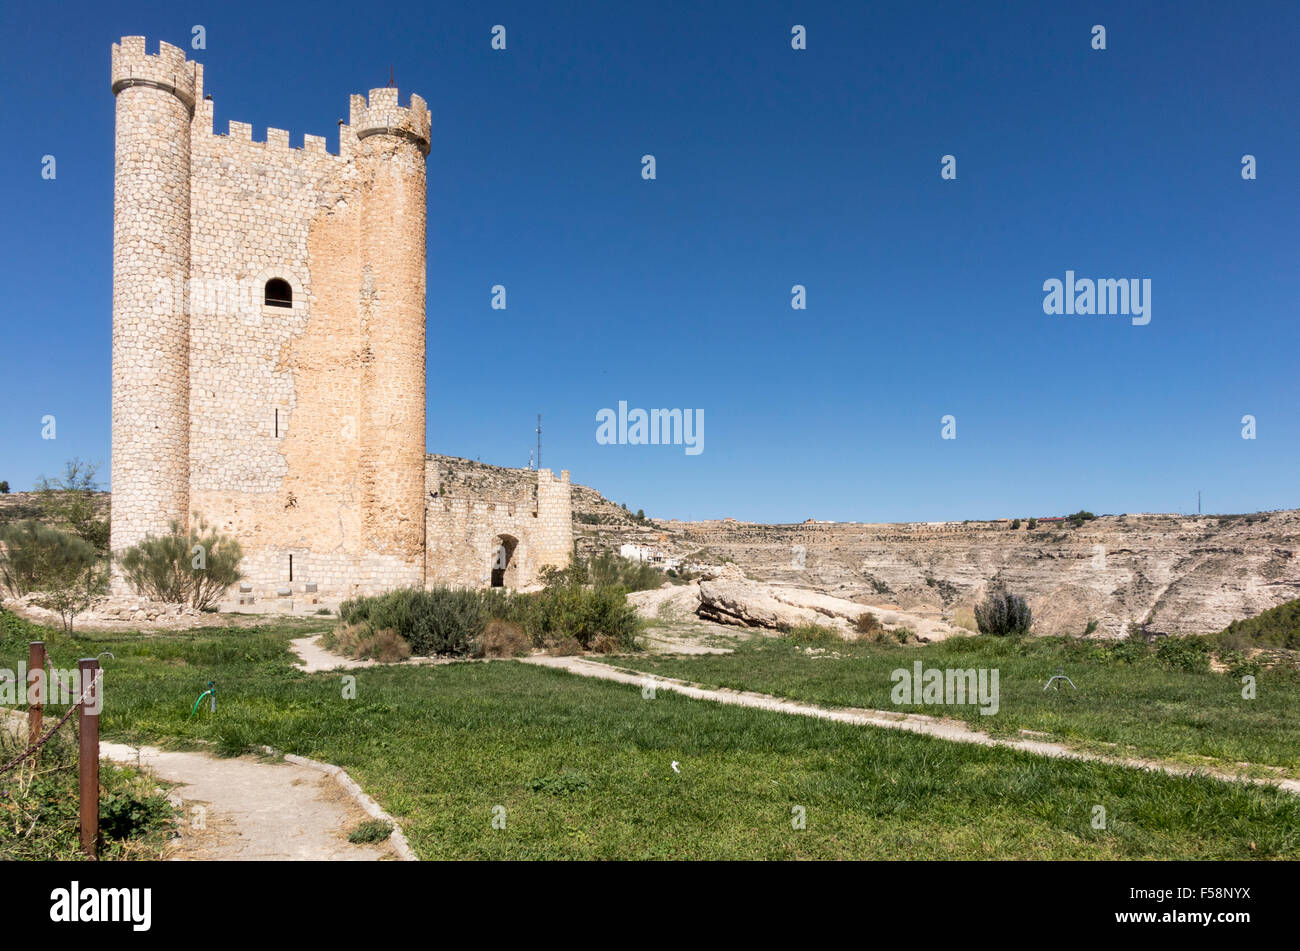 Castillo de Alcala del Jucar castle overlooking hilltop town of Alcala del Jucar  in Castilla-La Mancha, Spain, Europe Stock Photo